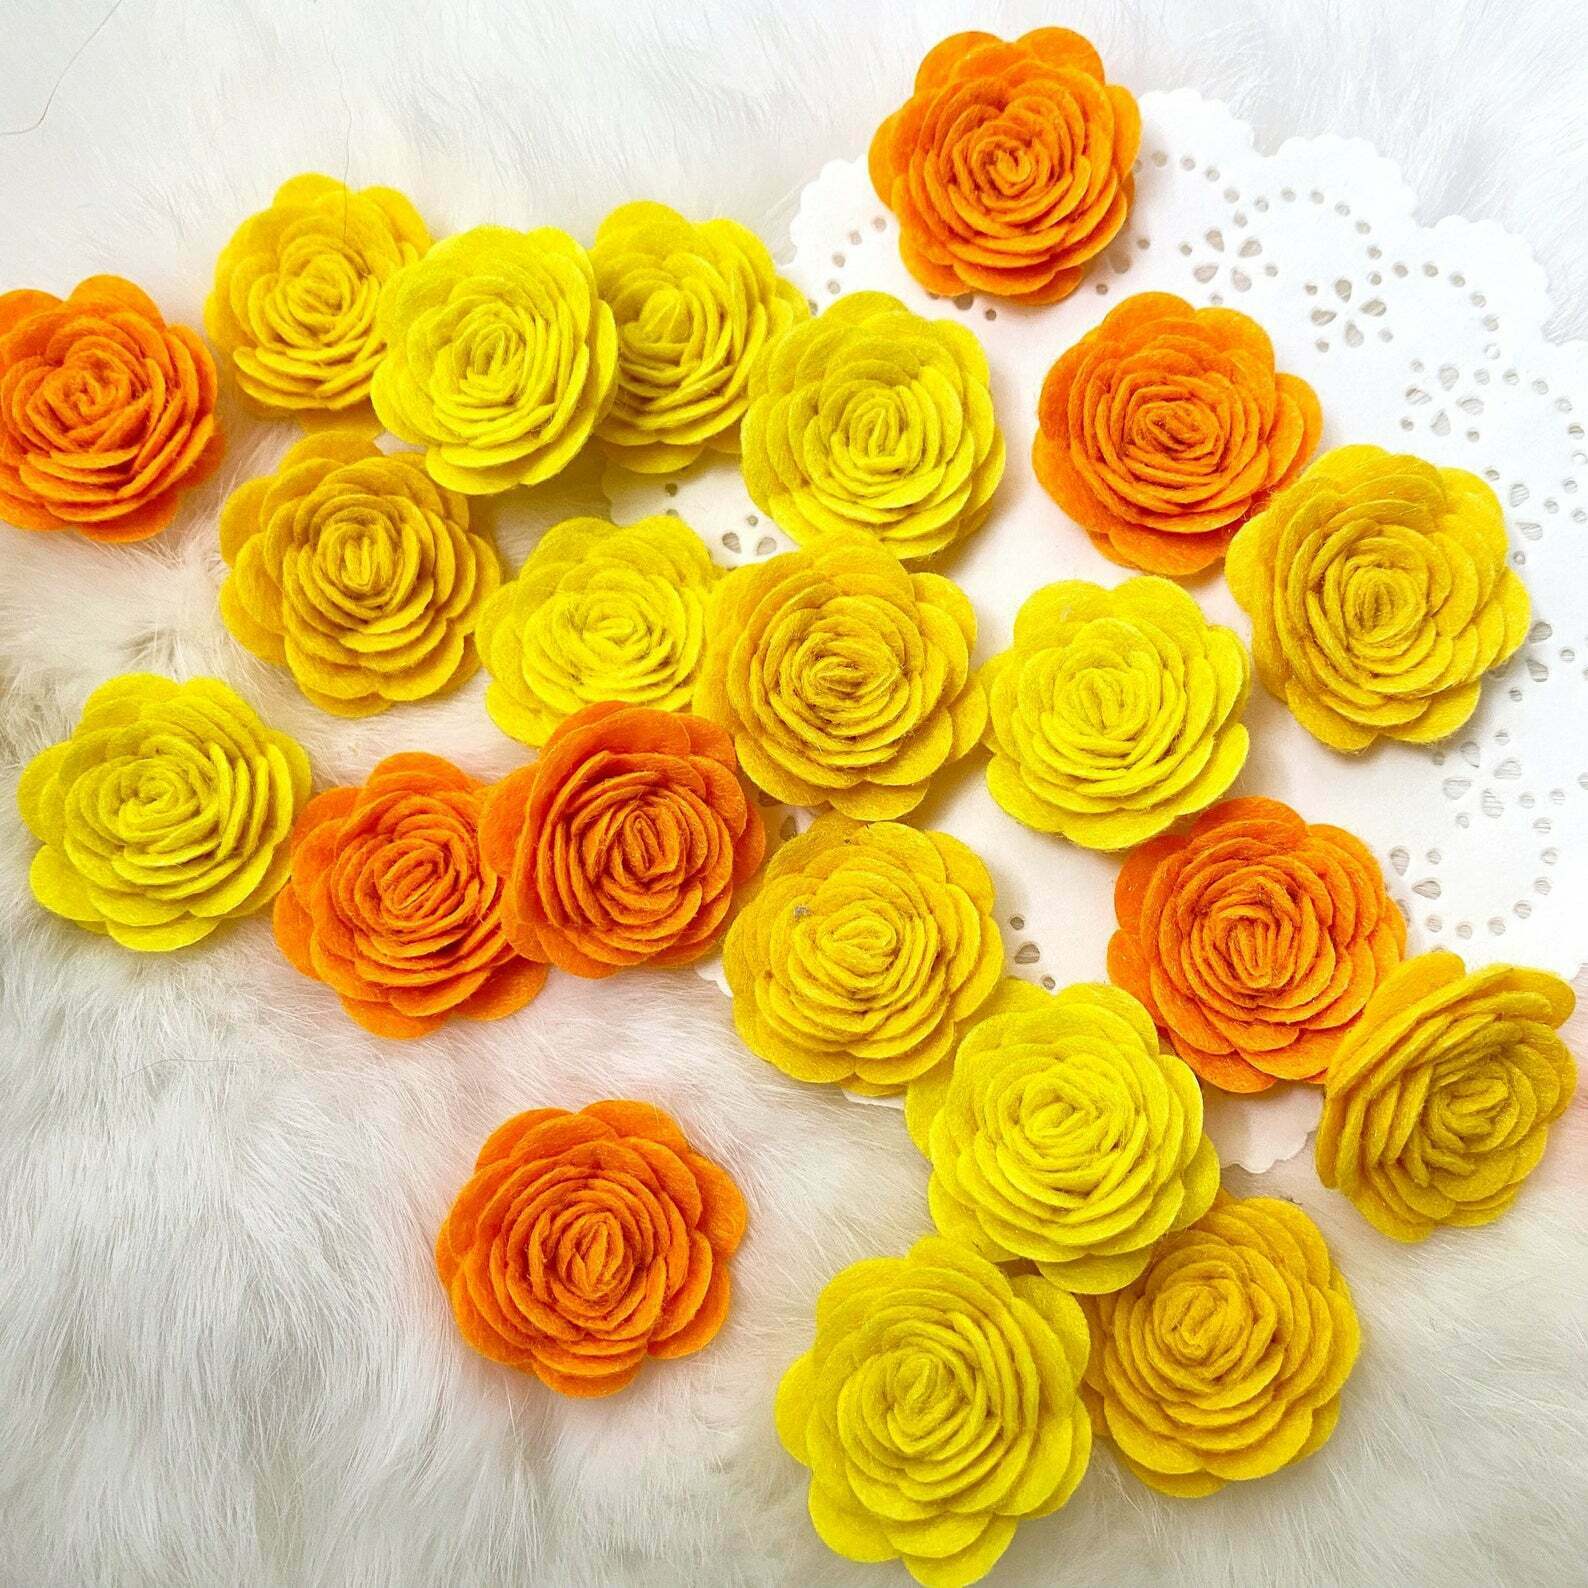 Yellow Felt Roses Wool Felt Flowers Autumn Craft Decor Embellishment Fabric Rose